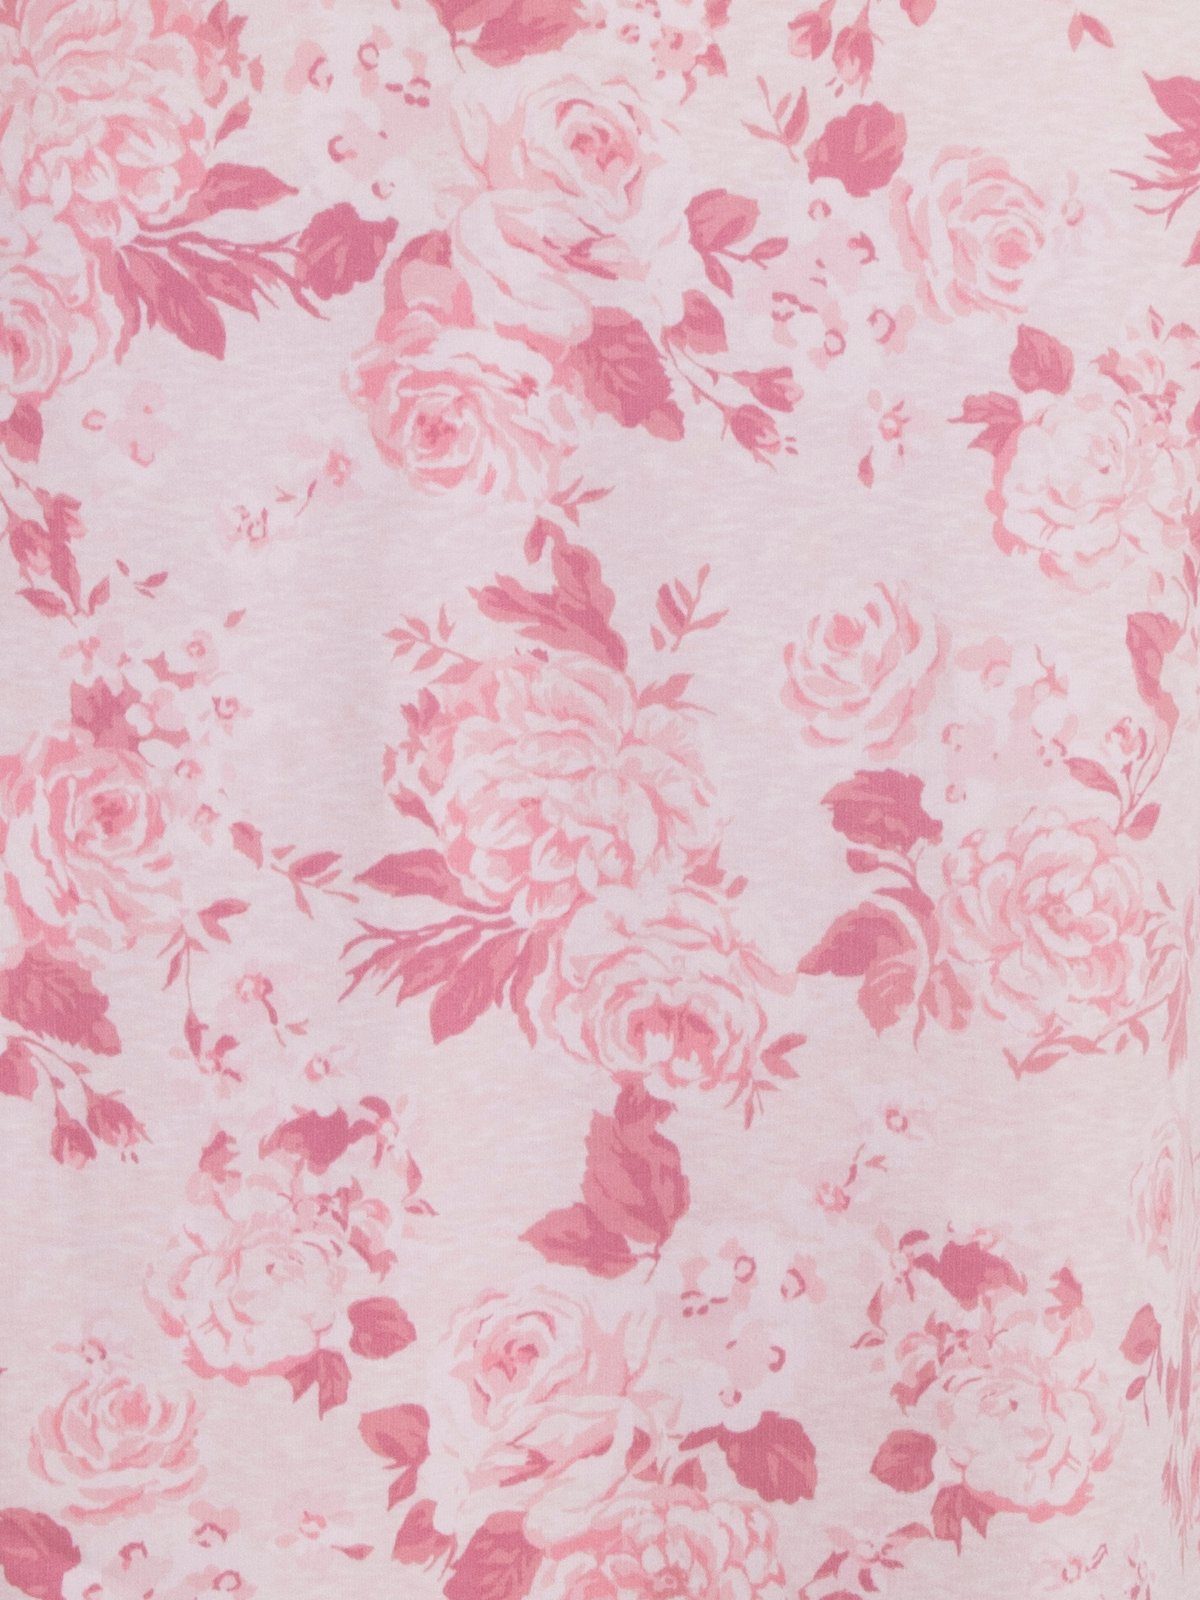 rosa - Nachthemd Nachthemd Thermo Rosen Blumen zeitlos